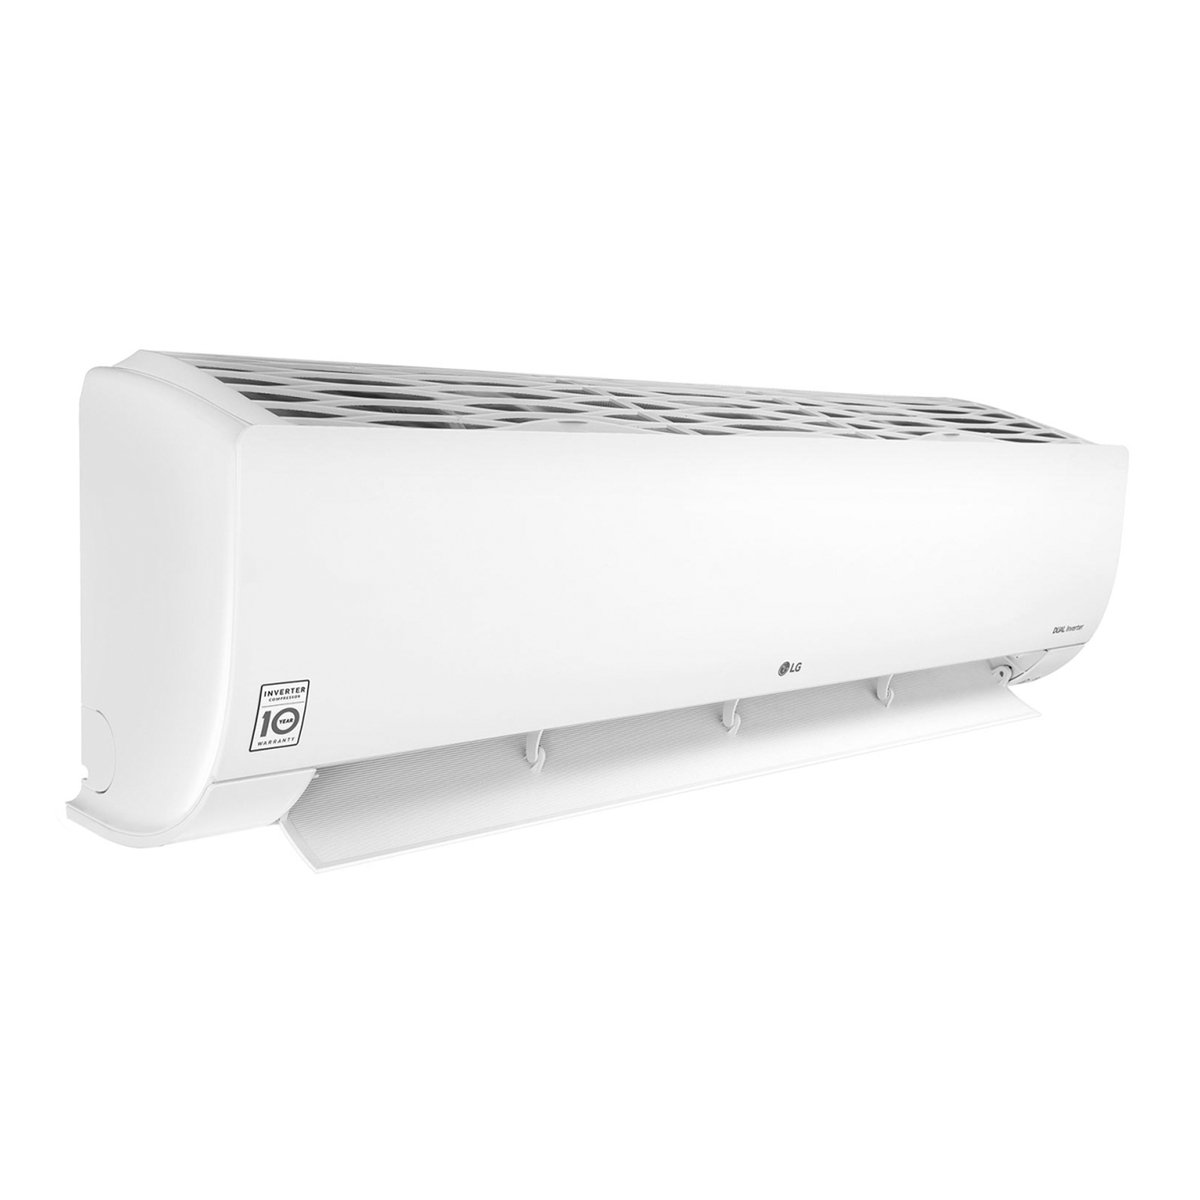 LG Split Air Conditioner 134TKF 2.5 Ton, Dual Inverter compressor